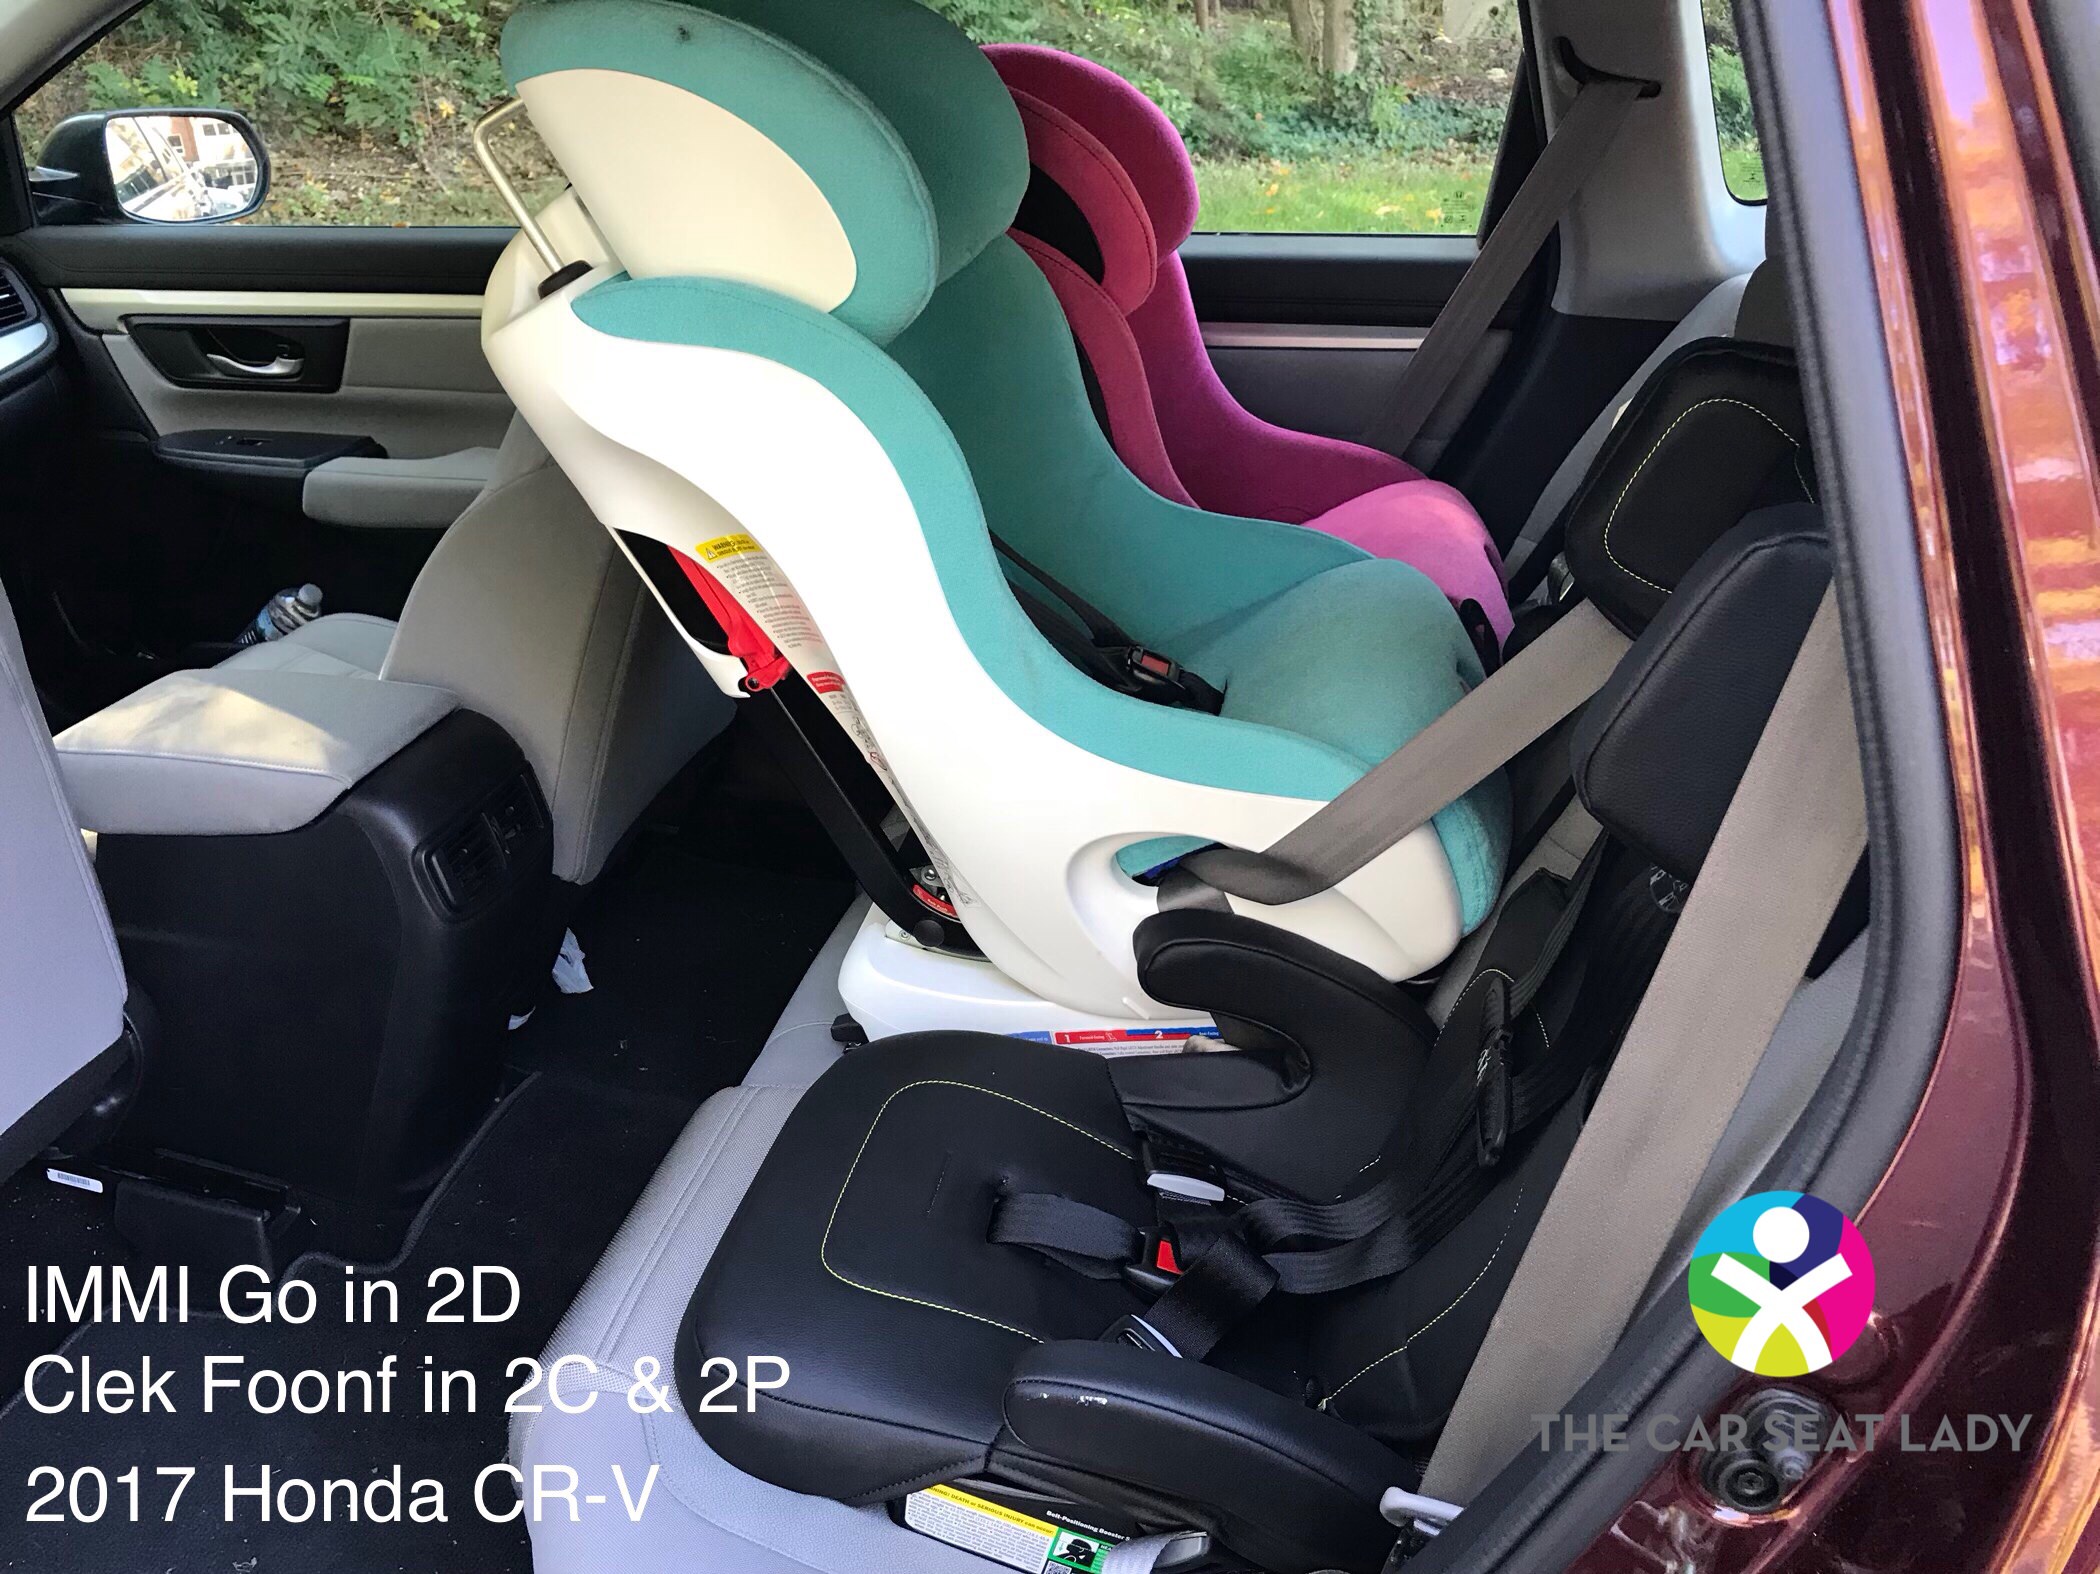 The Car Seat LadyHonda CR-V - The Car 